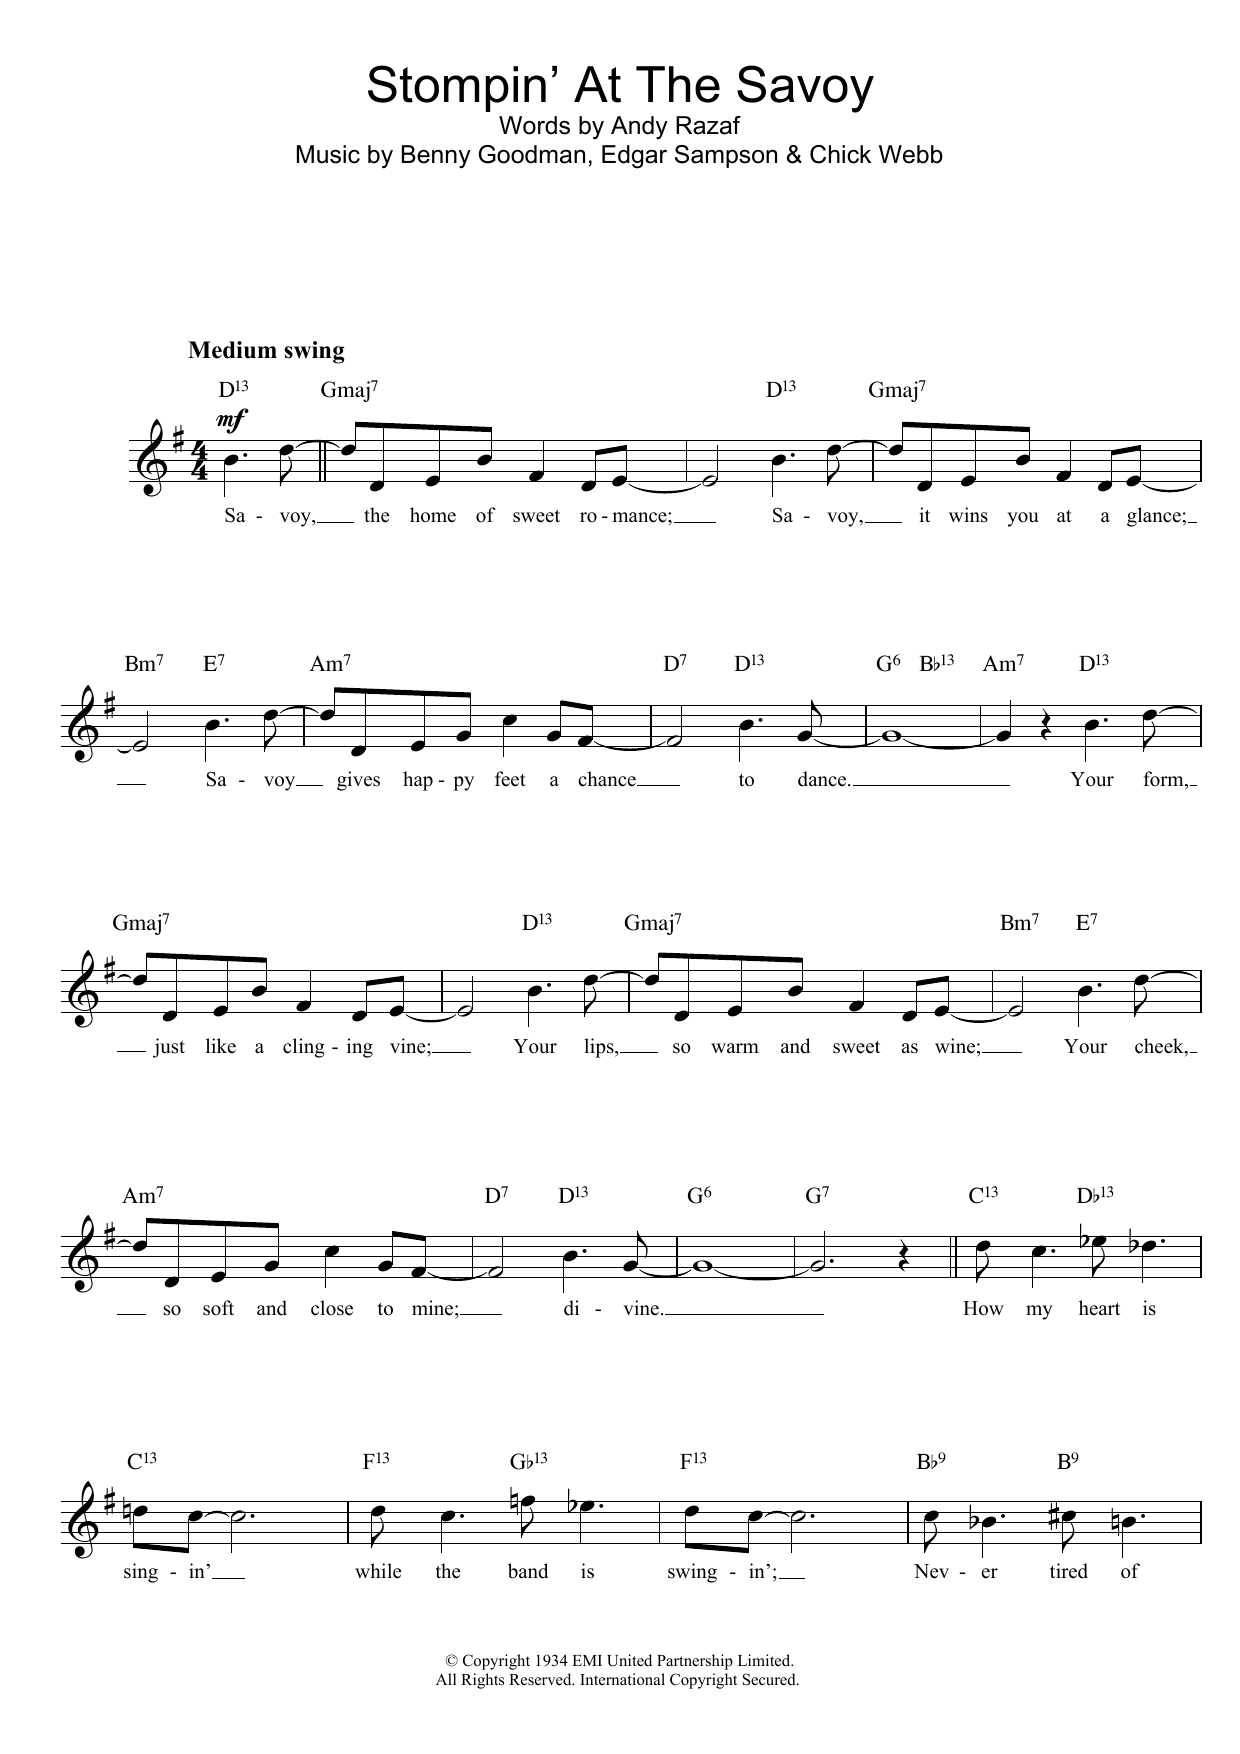 Benny Goodman Stompin' At The Savoy Sheet Music Notes & Chords for Alto Saxophone - Download or Print PDF